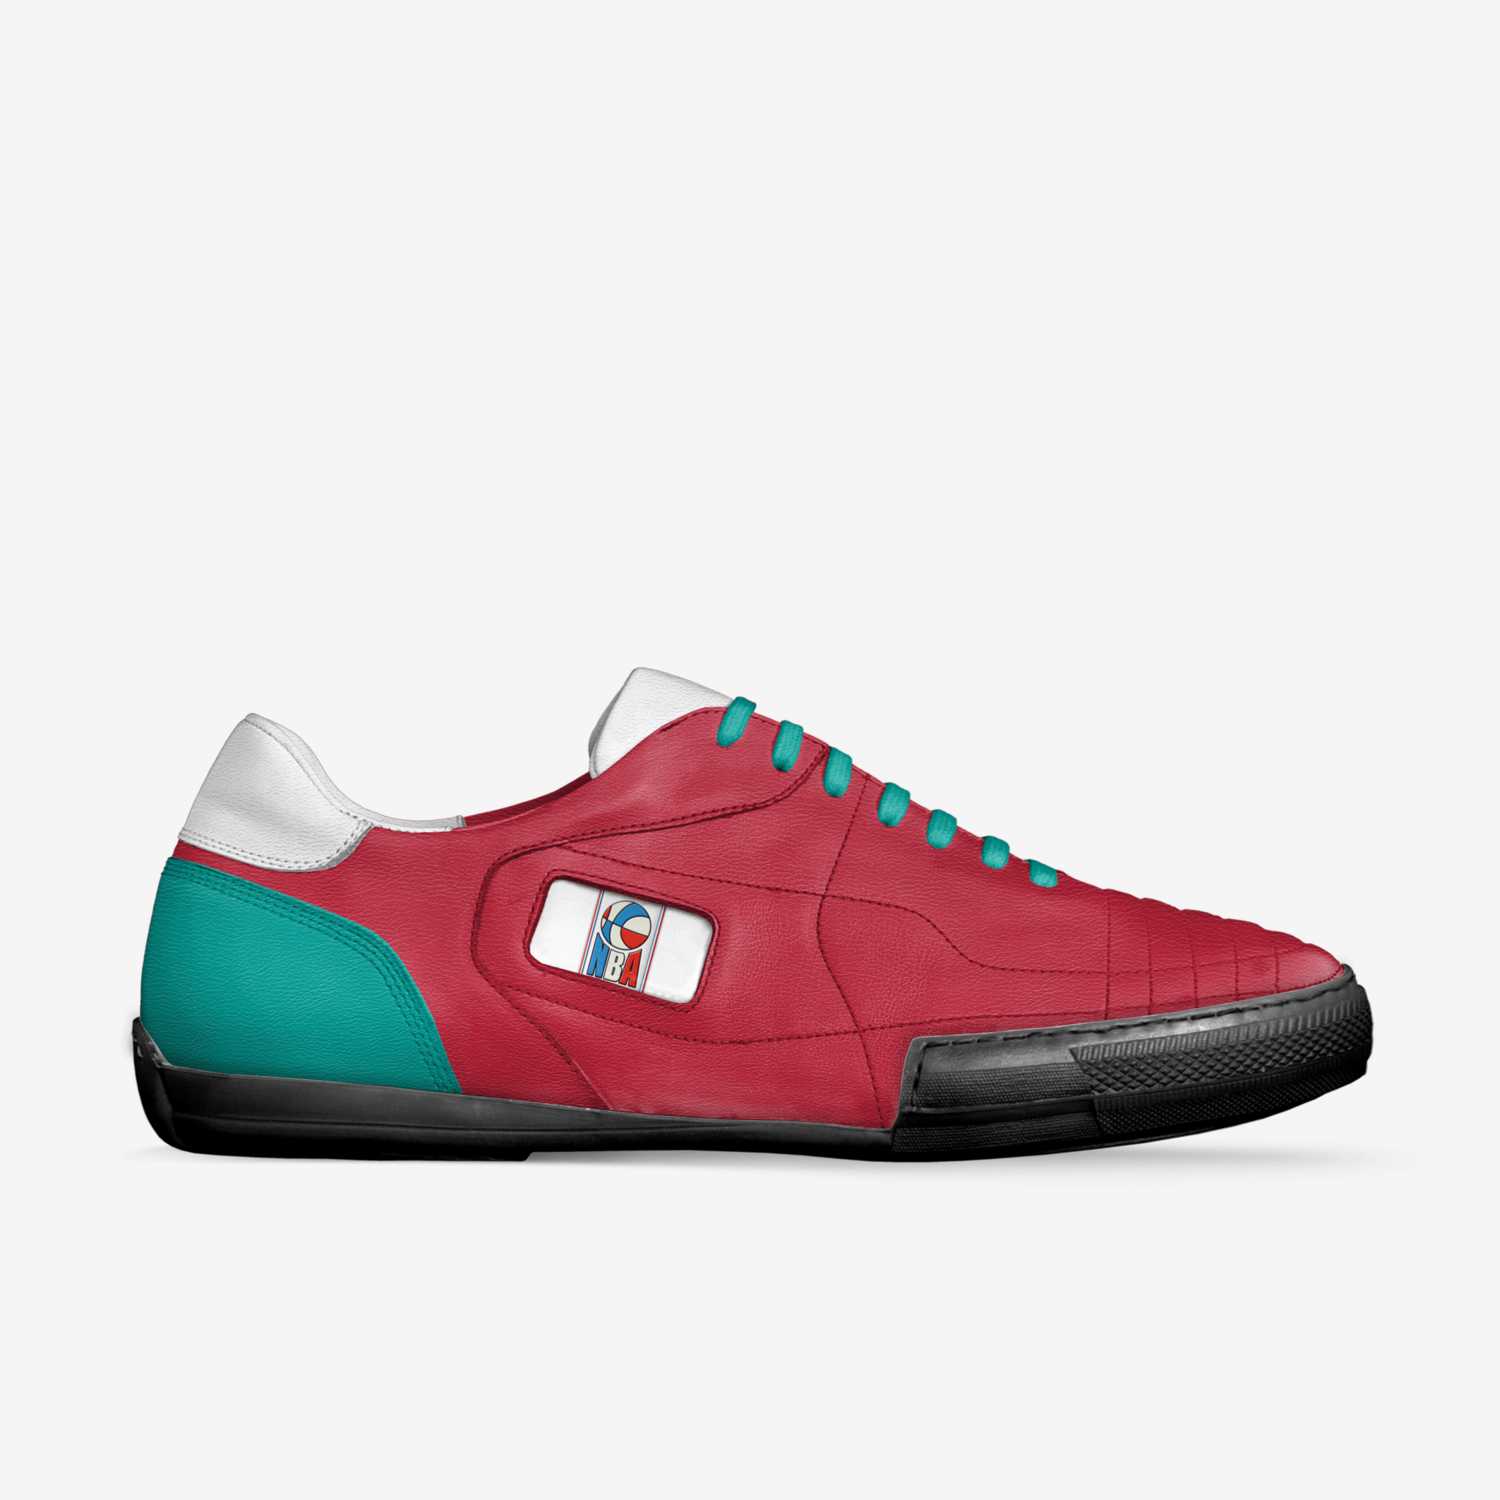 Anthony's Shoe Repair - Custom made Louis Vuitton X Converse . . . .  #Anthonyshoereapir #suedeclean #suede #clean #shoes #leatherworks  #shoerepair #redsoles #shoerestoration #fashion #christianlouboutin  #CoronaDelMar #gucci #louisvuitton #shoes #LV